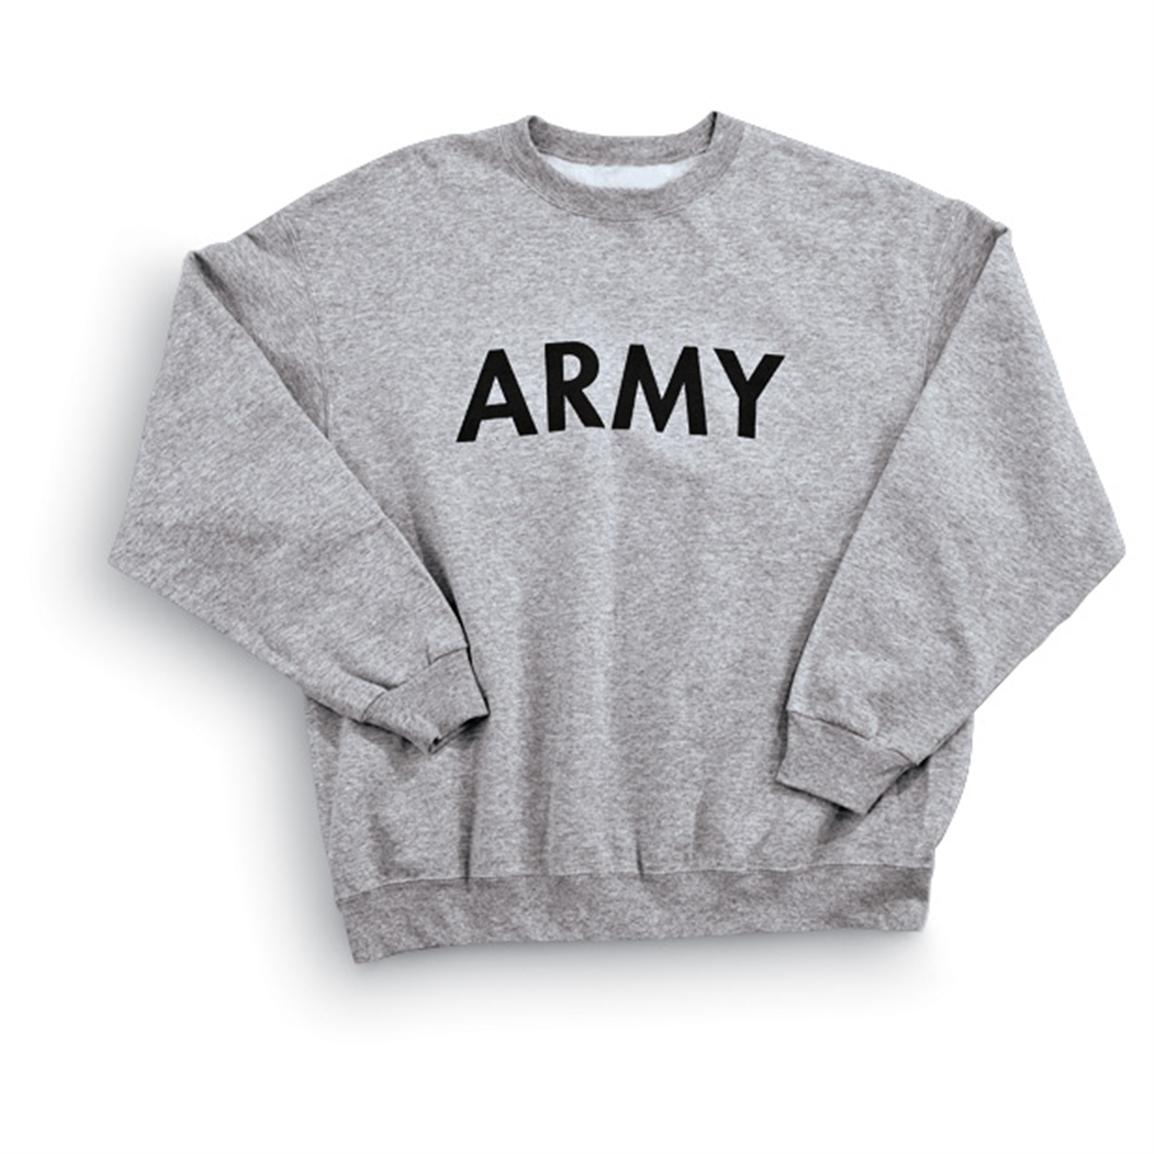 Military - style Service Branch Sweatshirt, Gray - 114657, Military